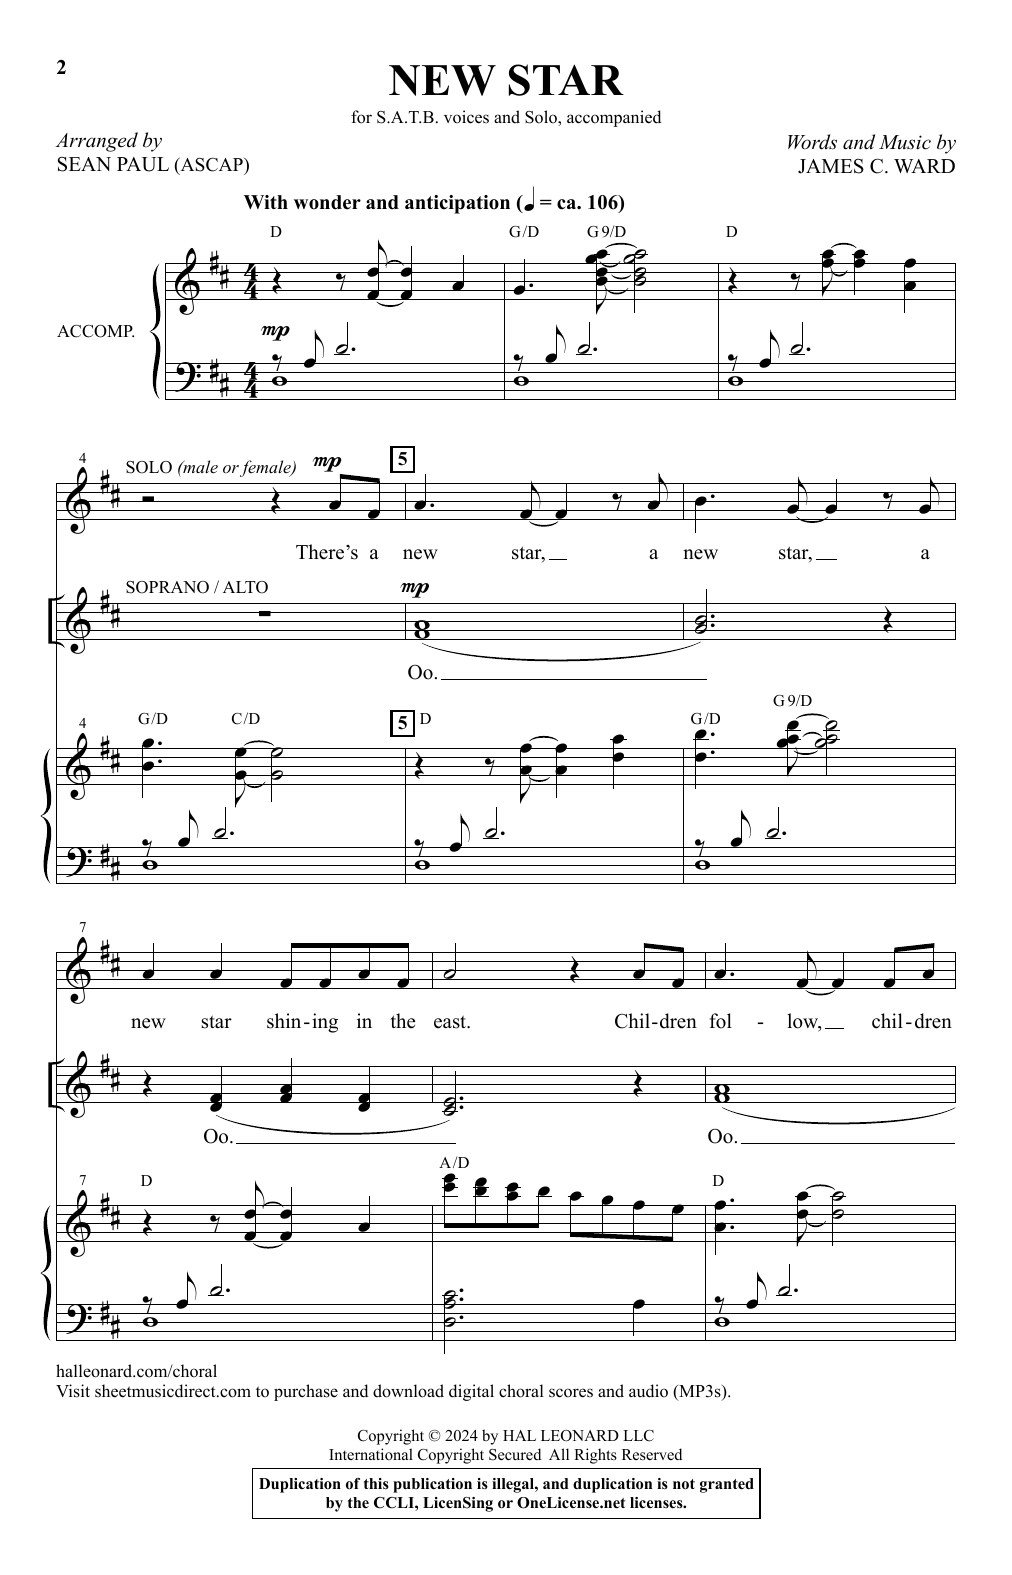 James C. Ward New Star (arr. Sean Paul) sheet music notes and chords arranged for SATB Choir